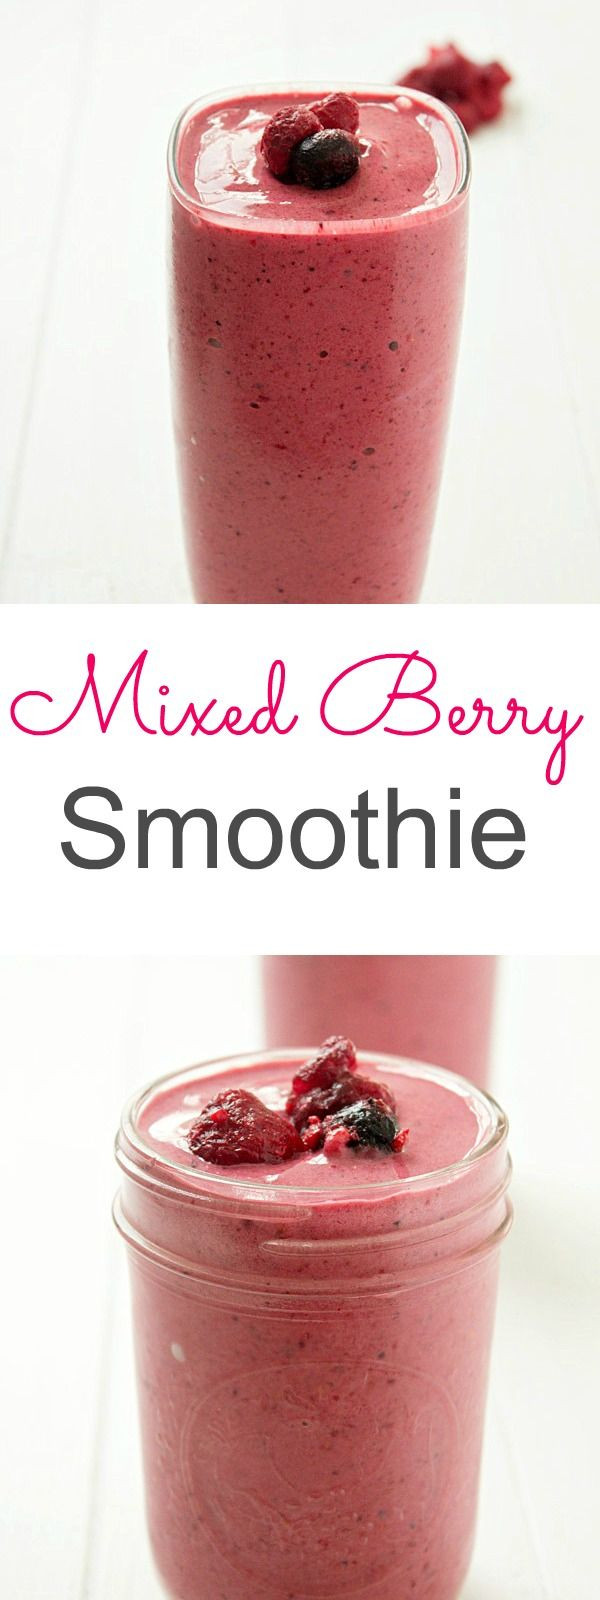 Fruit Yogurt Smoothies Recipes
 Mixed Berry Smoothie Recipe